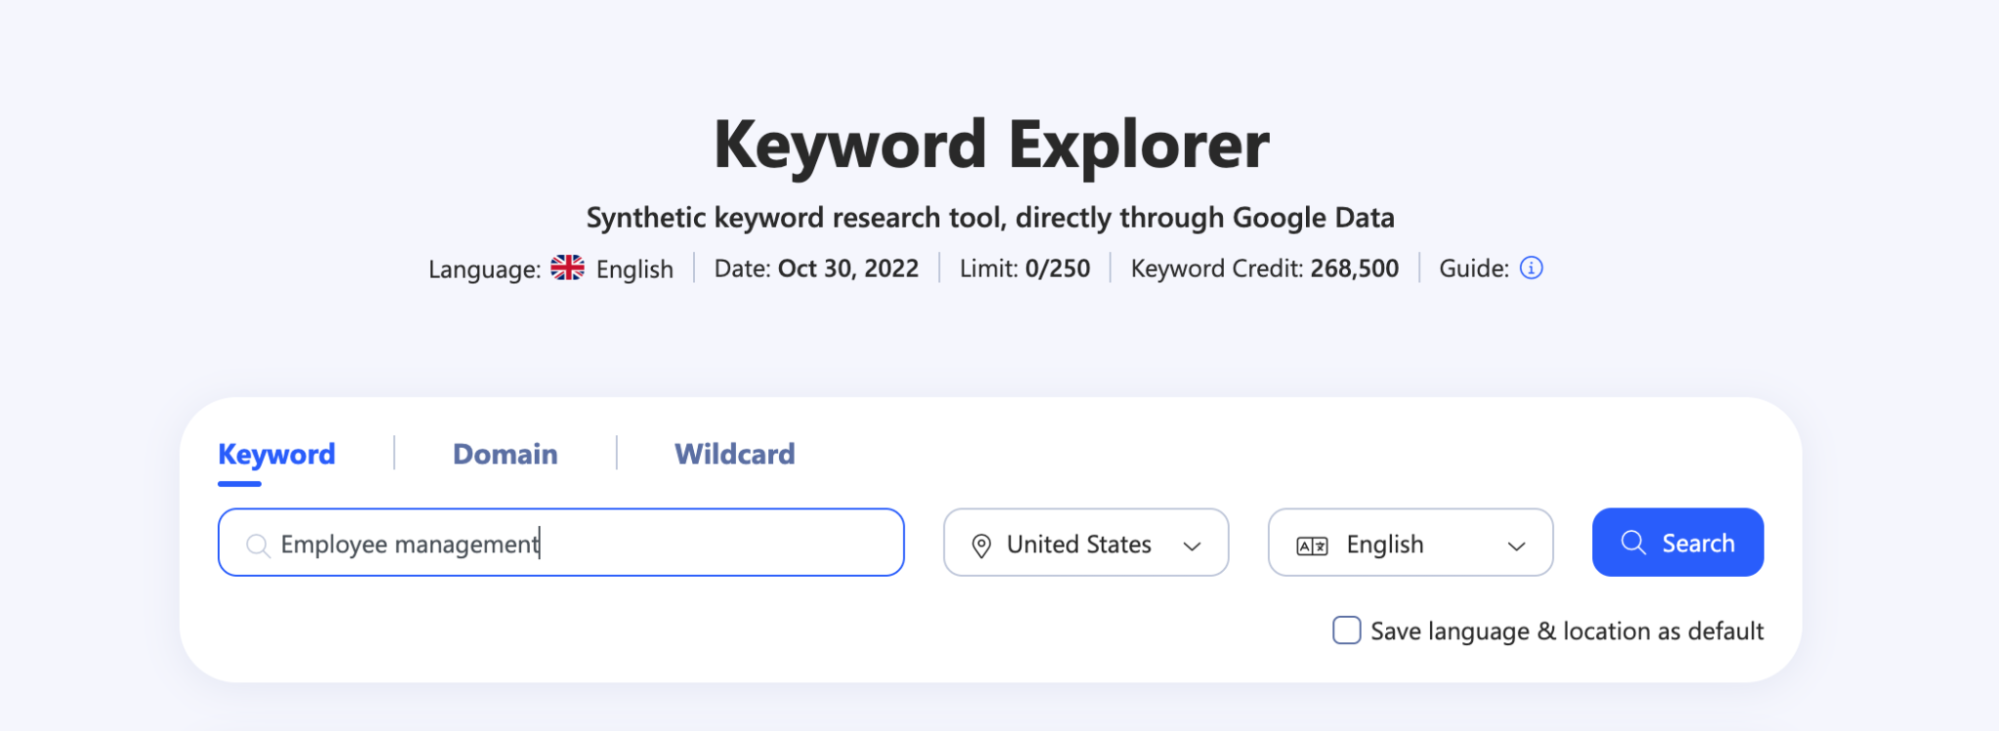 Adding Seed Keyword To Keyword Explorer